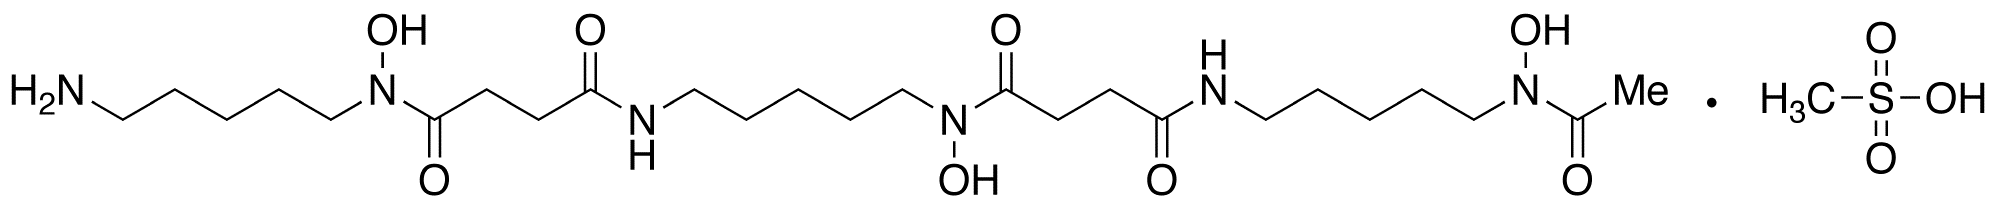 Deferoxamine Mesylate